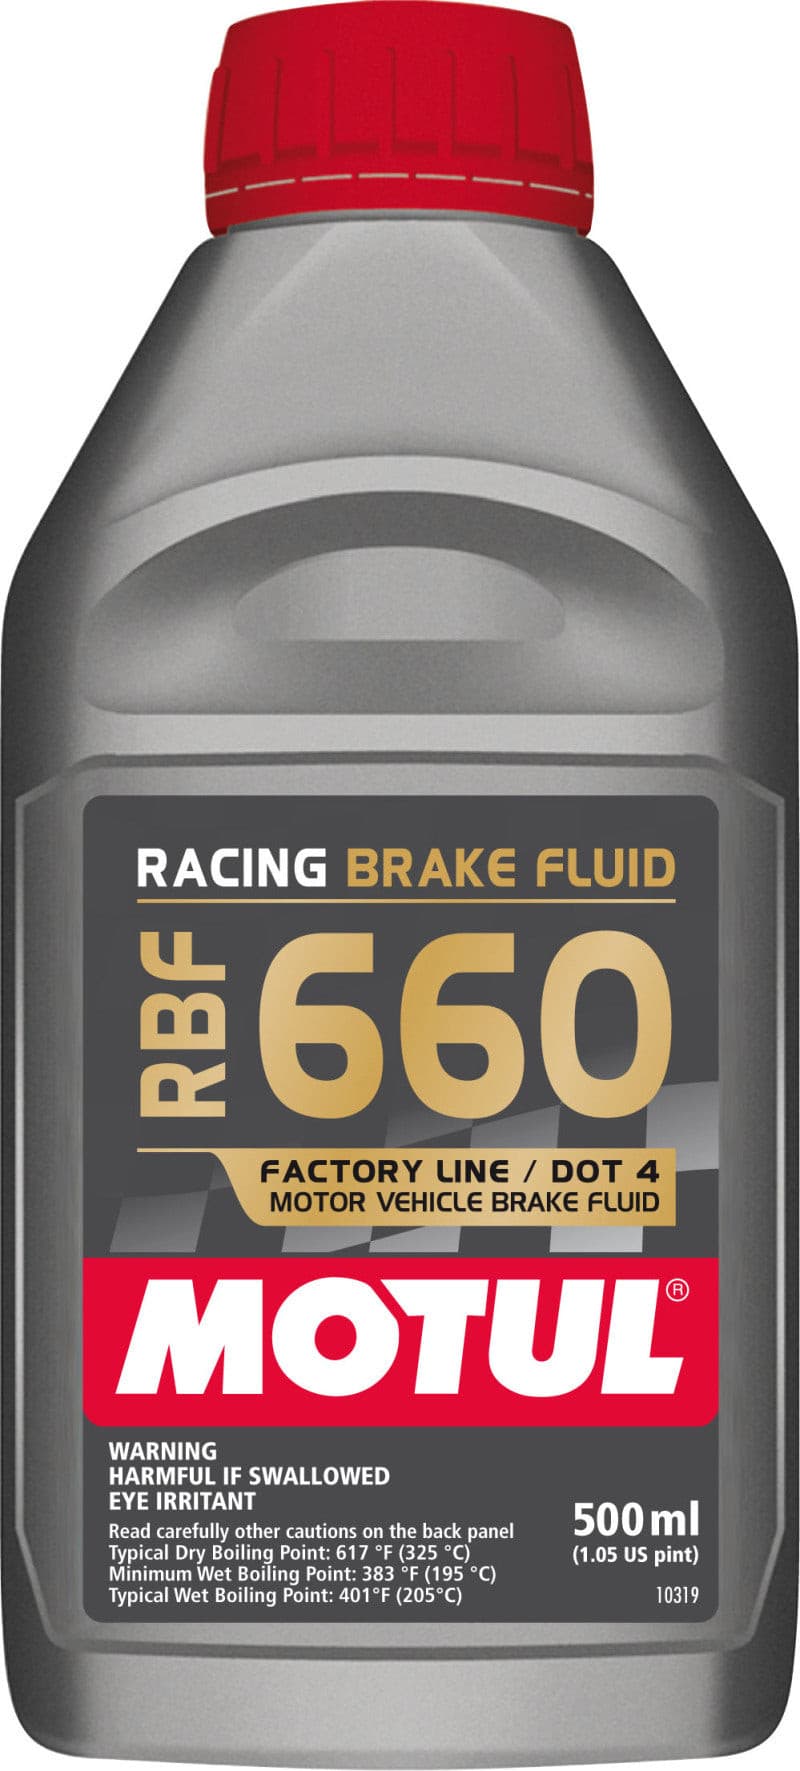 Motul 1/2L Brake Fluid RBF 660 - Racing DOT 4.